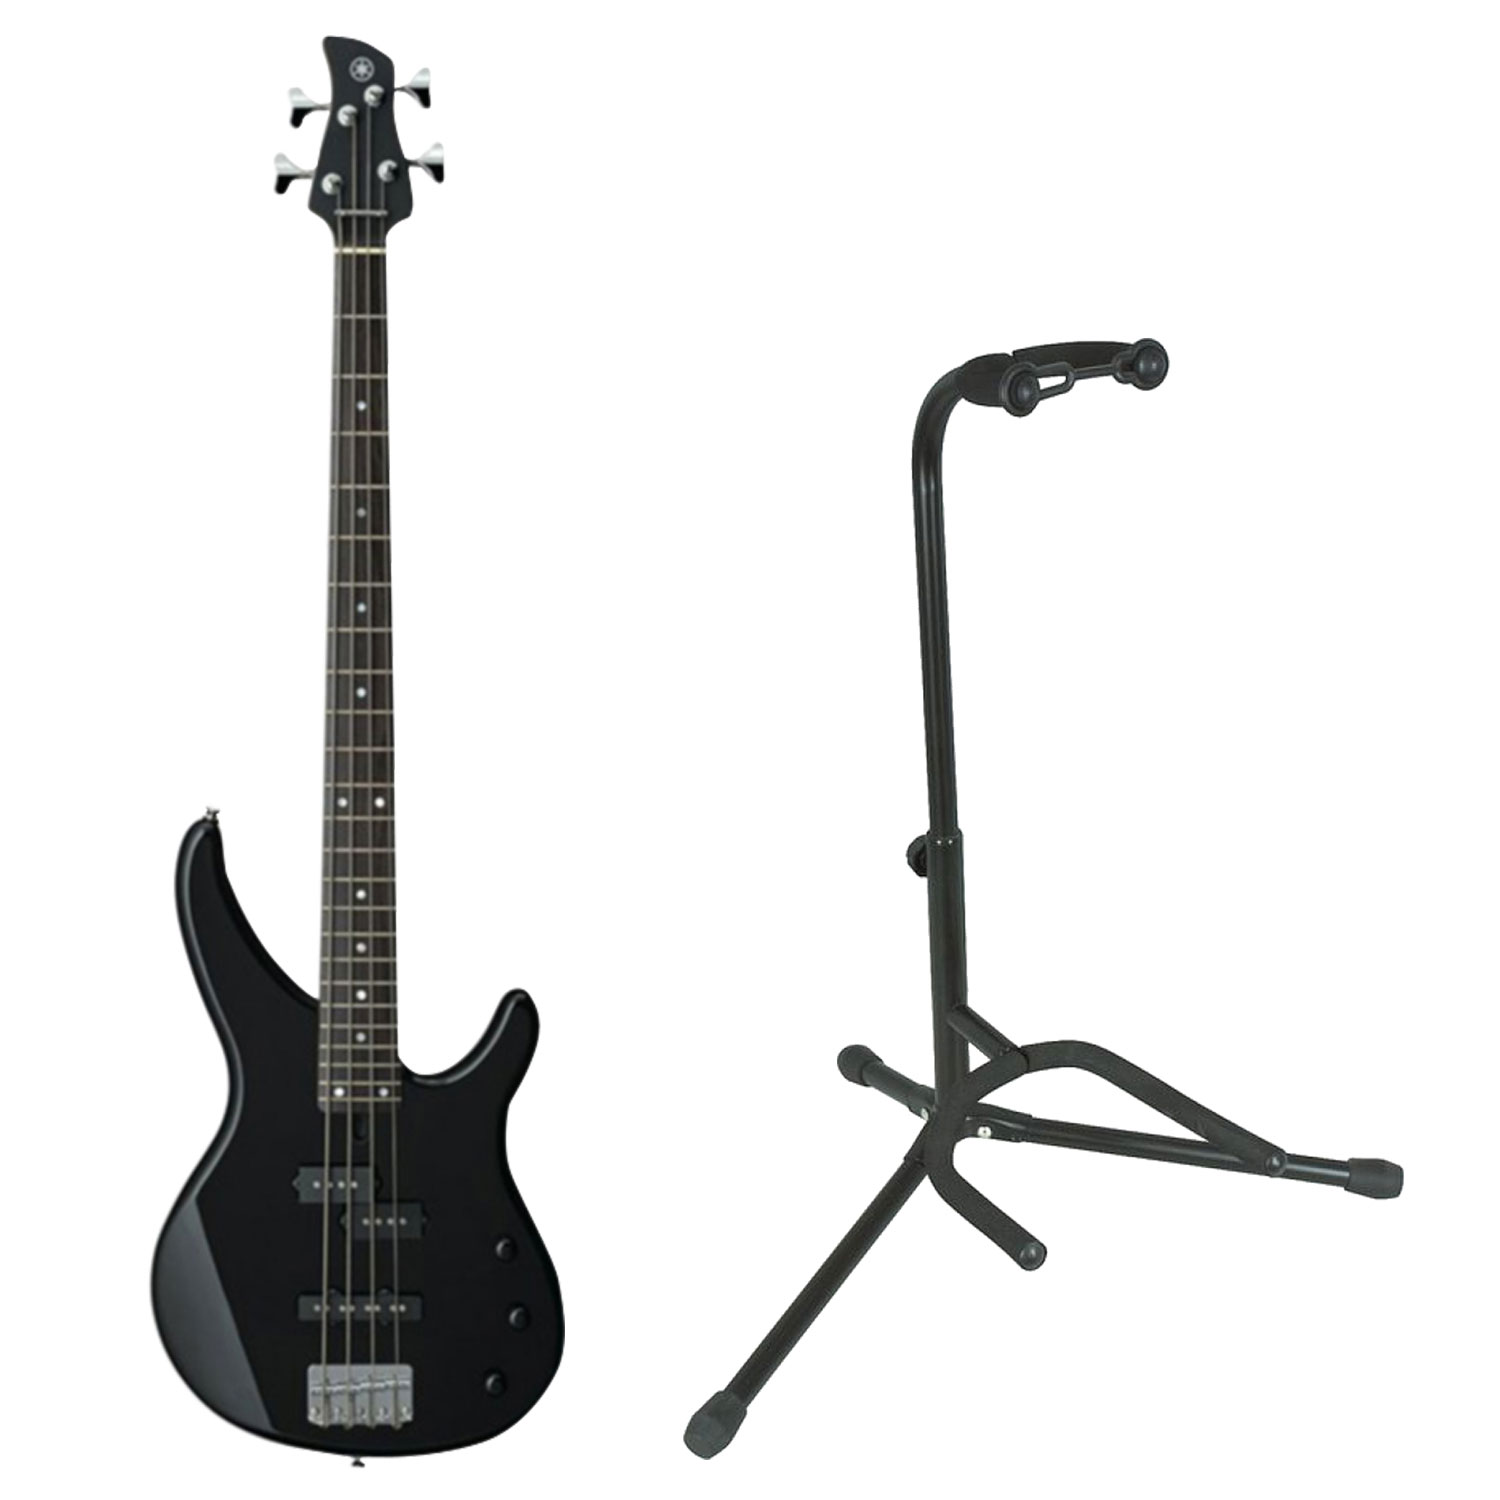 Yamaha TRBX174 Bass Guitar & On-Stage Classic Tubular Guitar Stand - Black